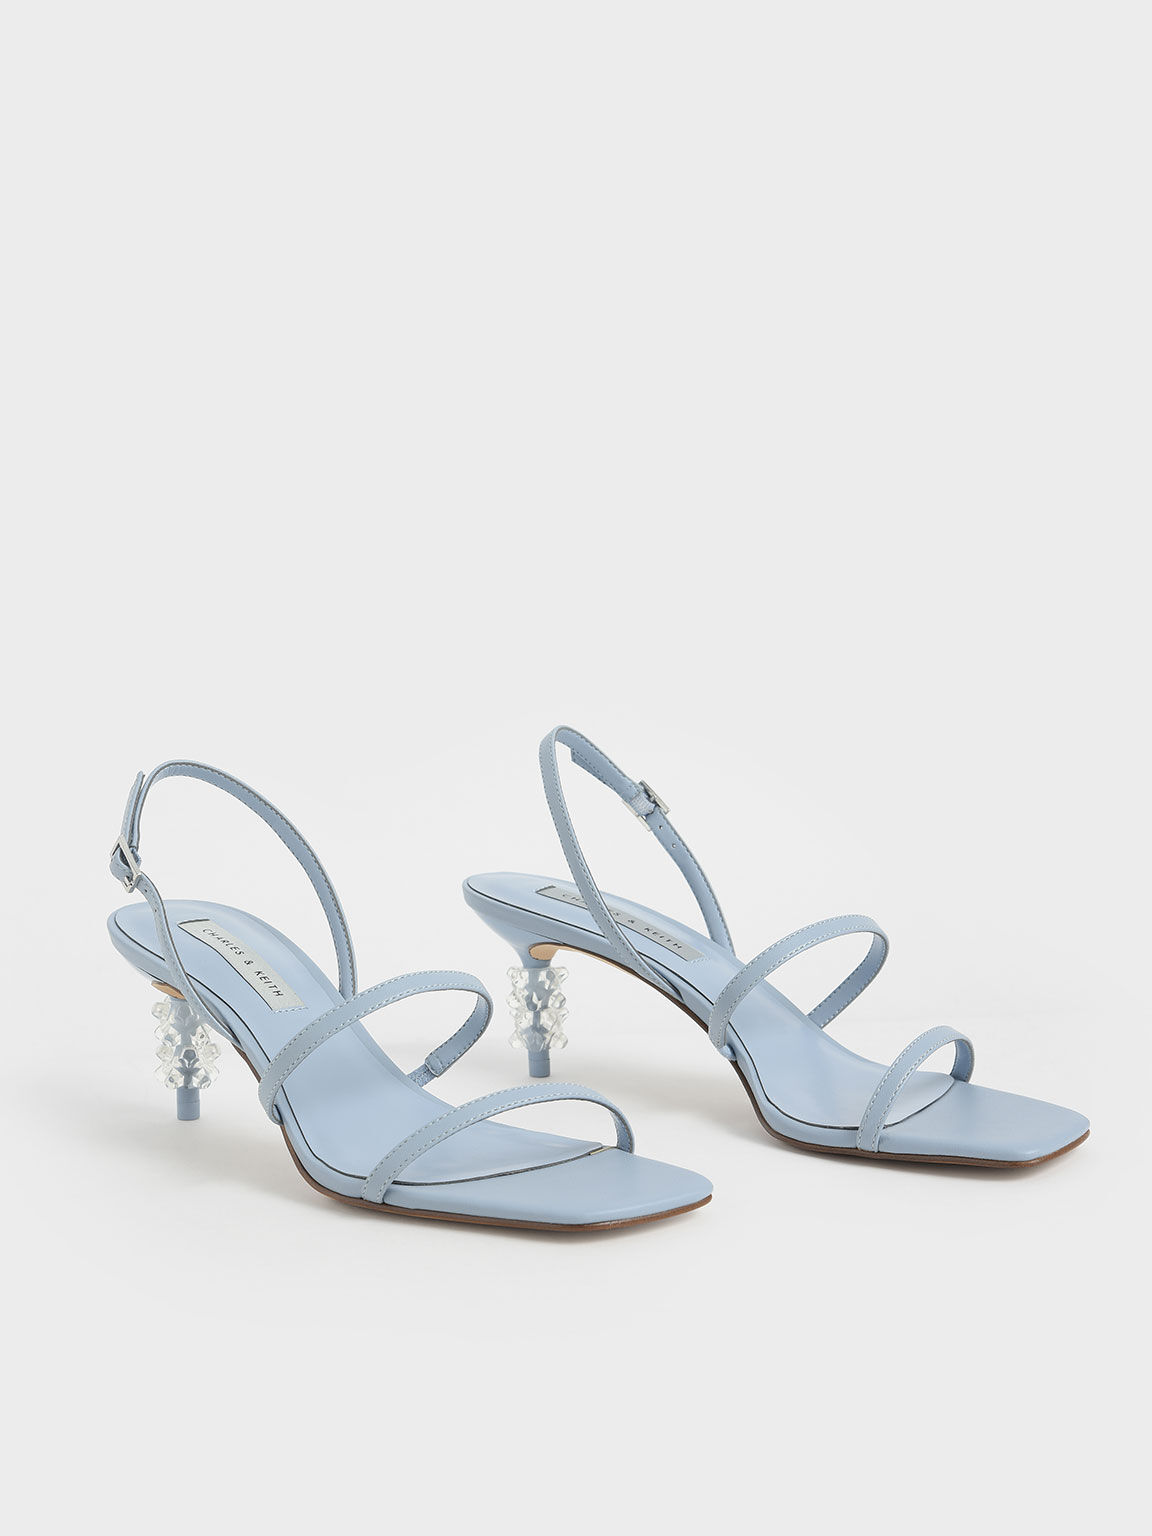 Geometric Heel Strappy Sandals, Light Blue, hi-res